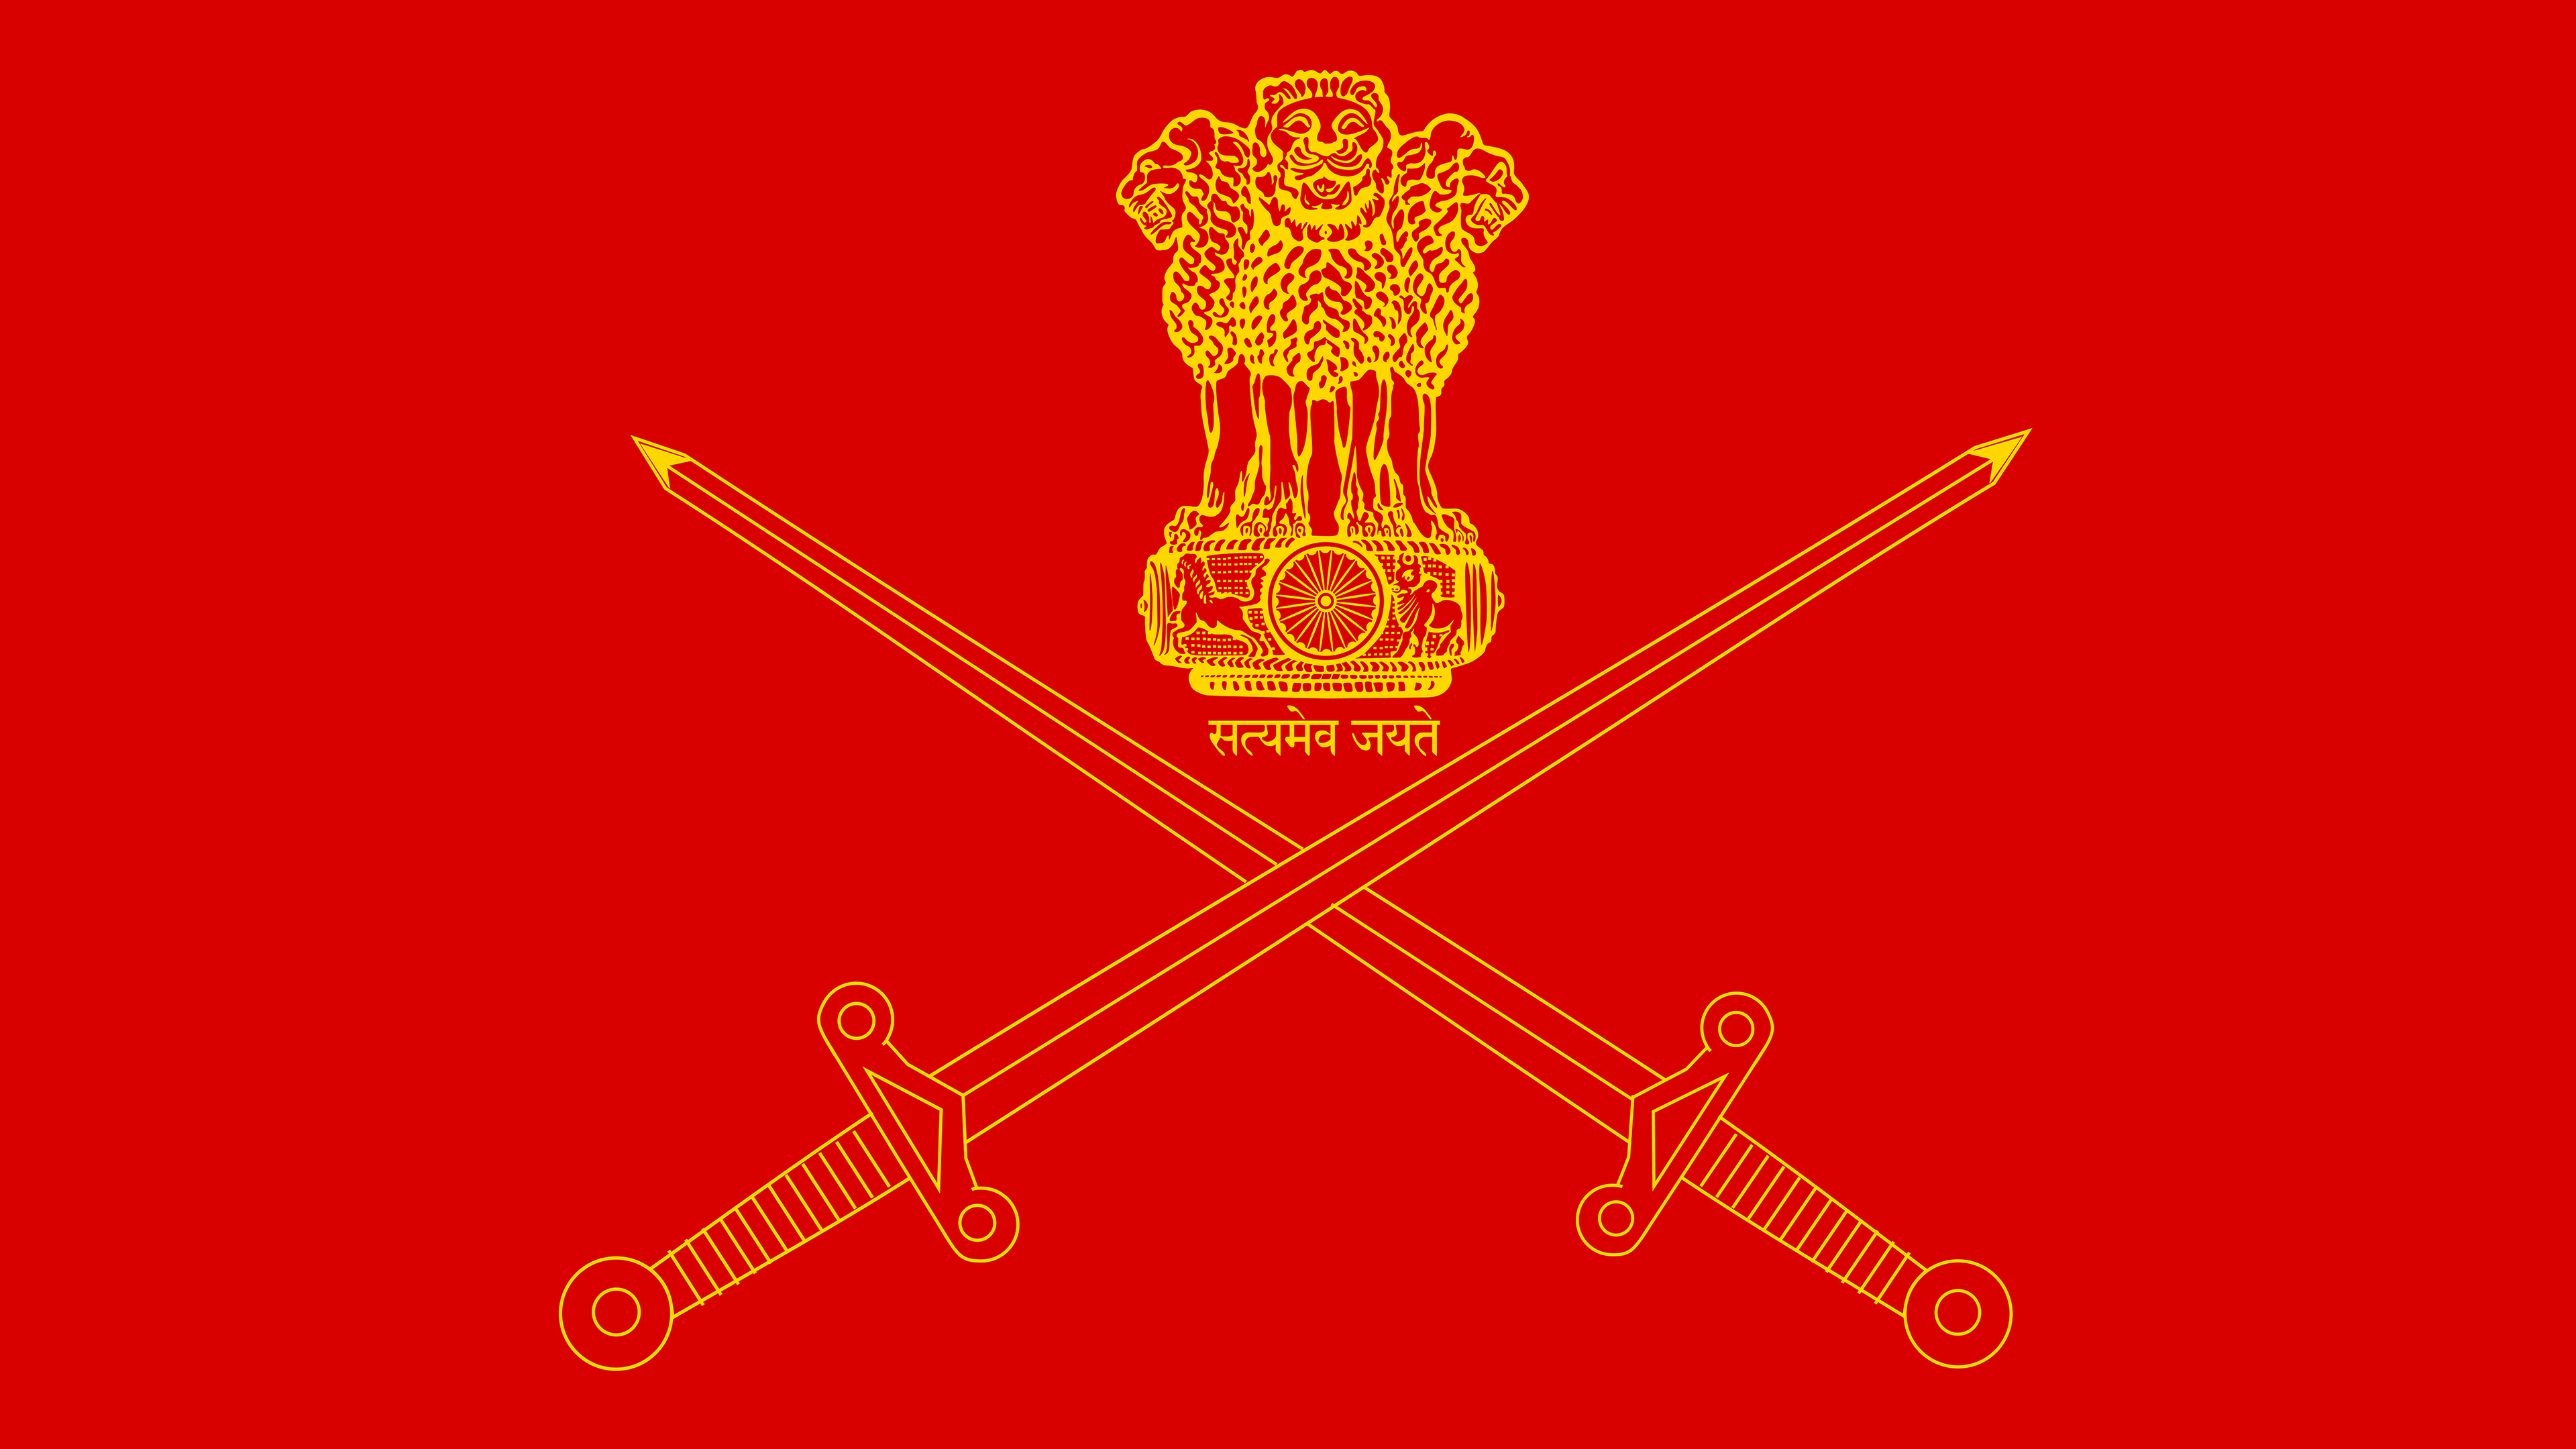 File:Madras regiment crest.gif - Wikipedia